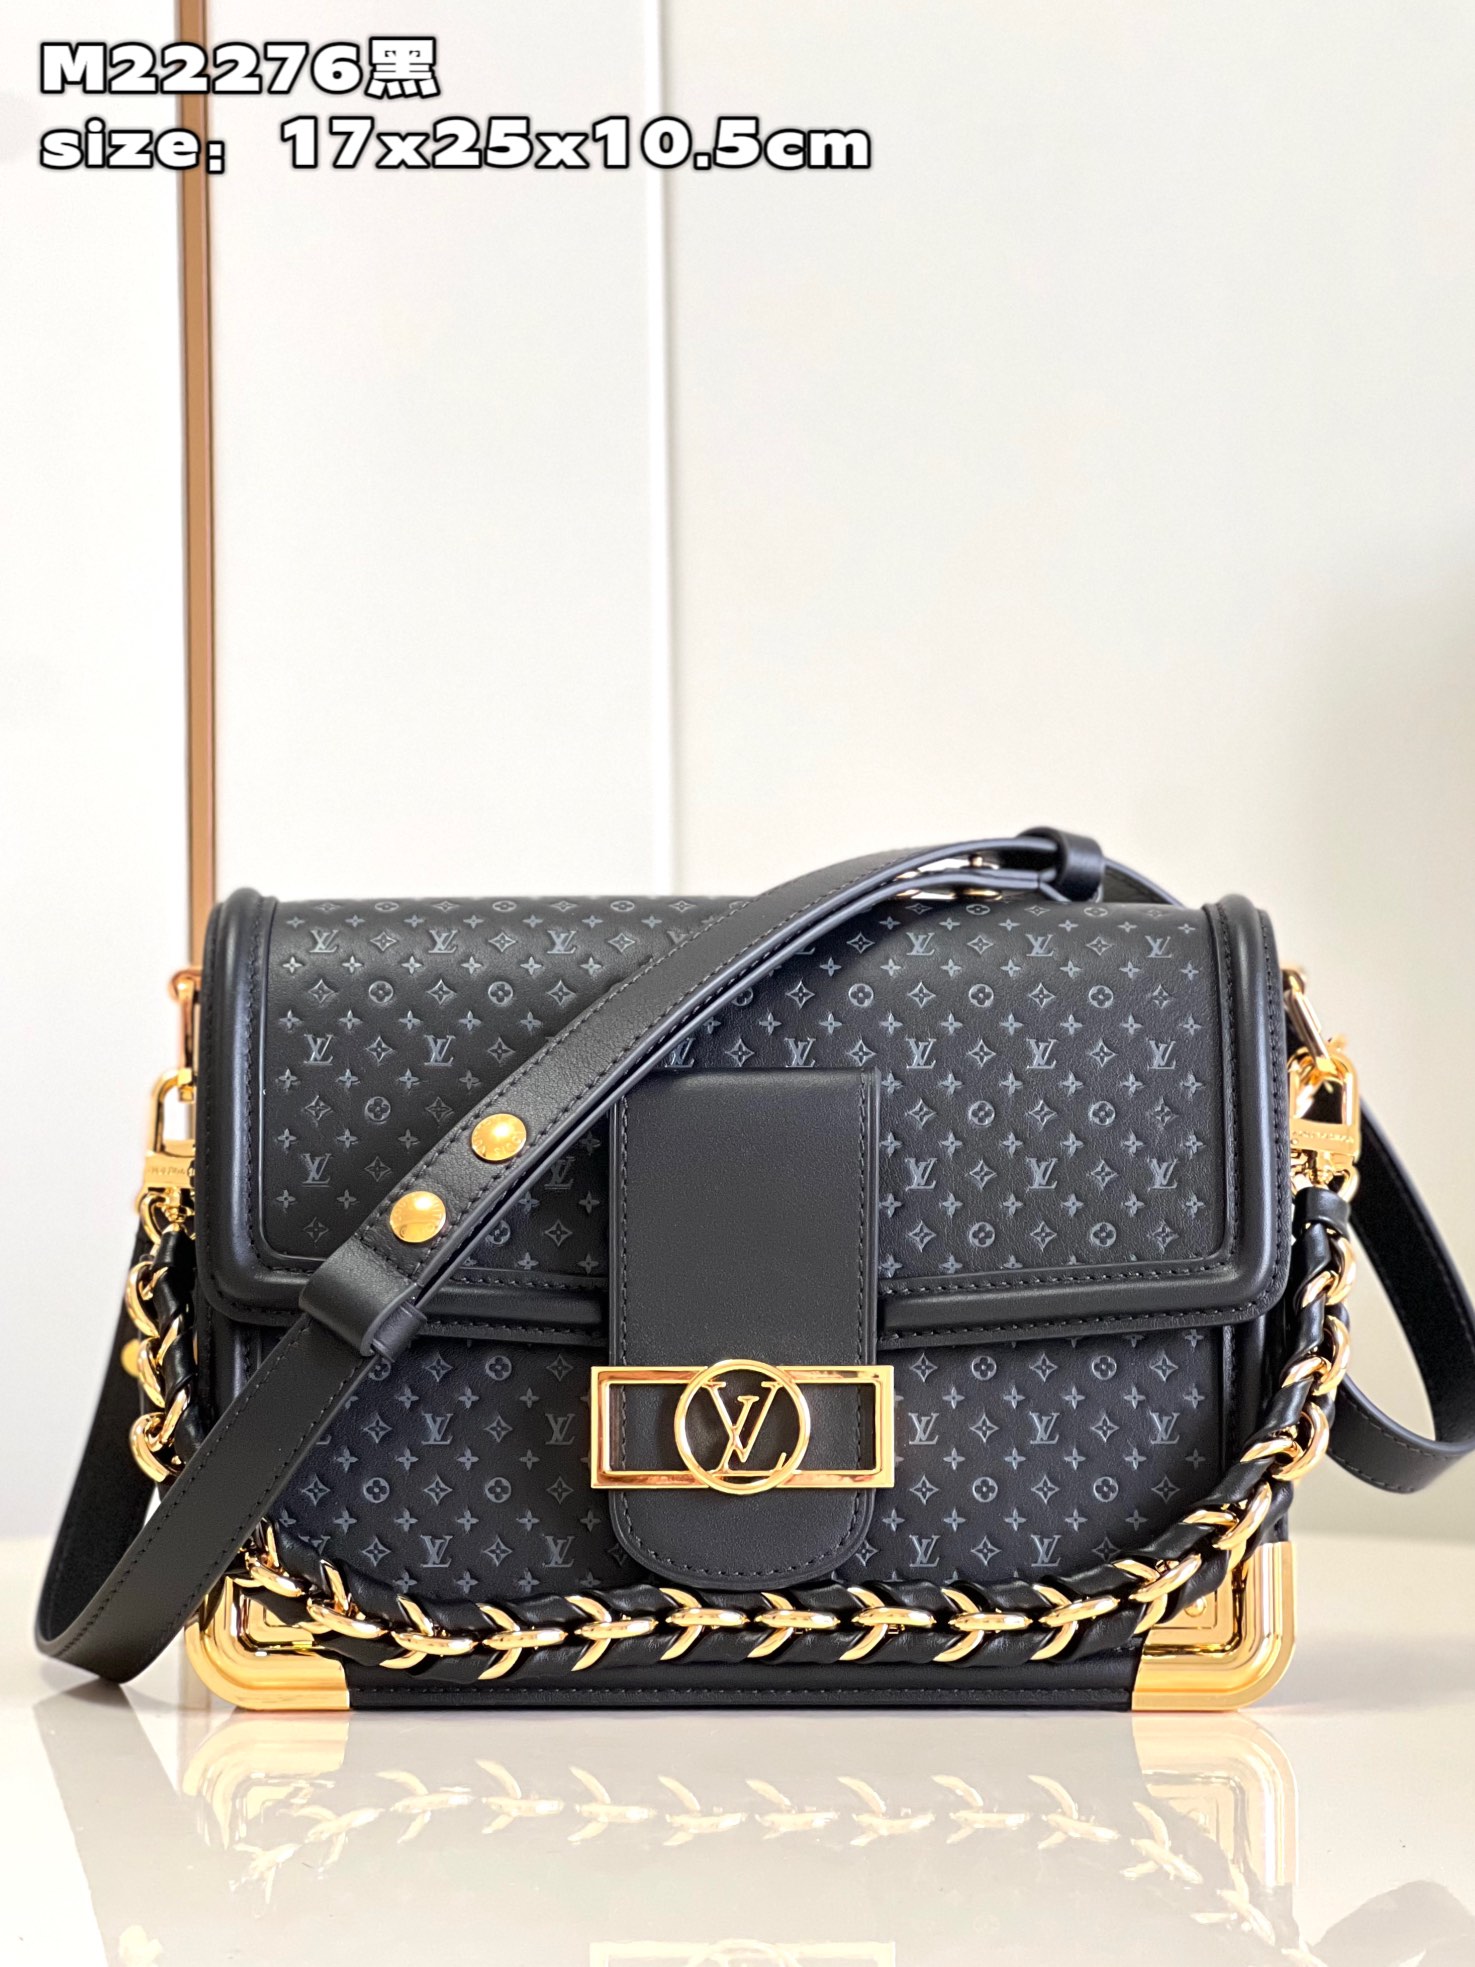 High Quality 1:1 Replica
 Louis Vuitton LV Dauphine Bags Handbags Luxury Cheap
 Black Cowhide Mini M22276